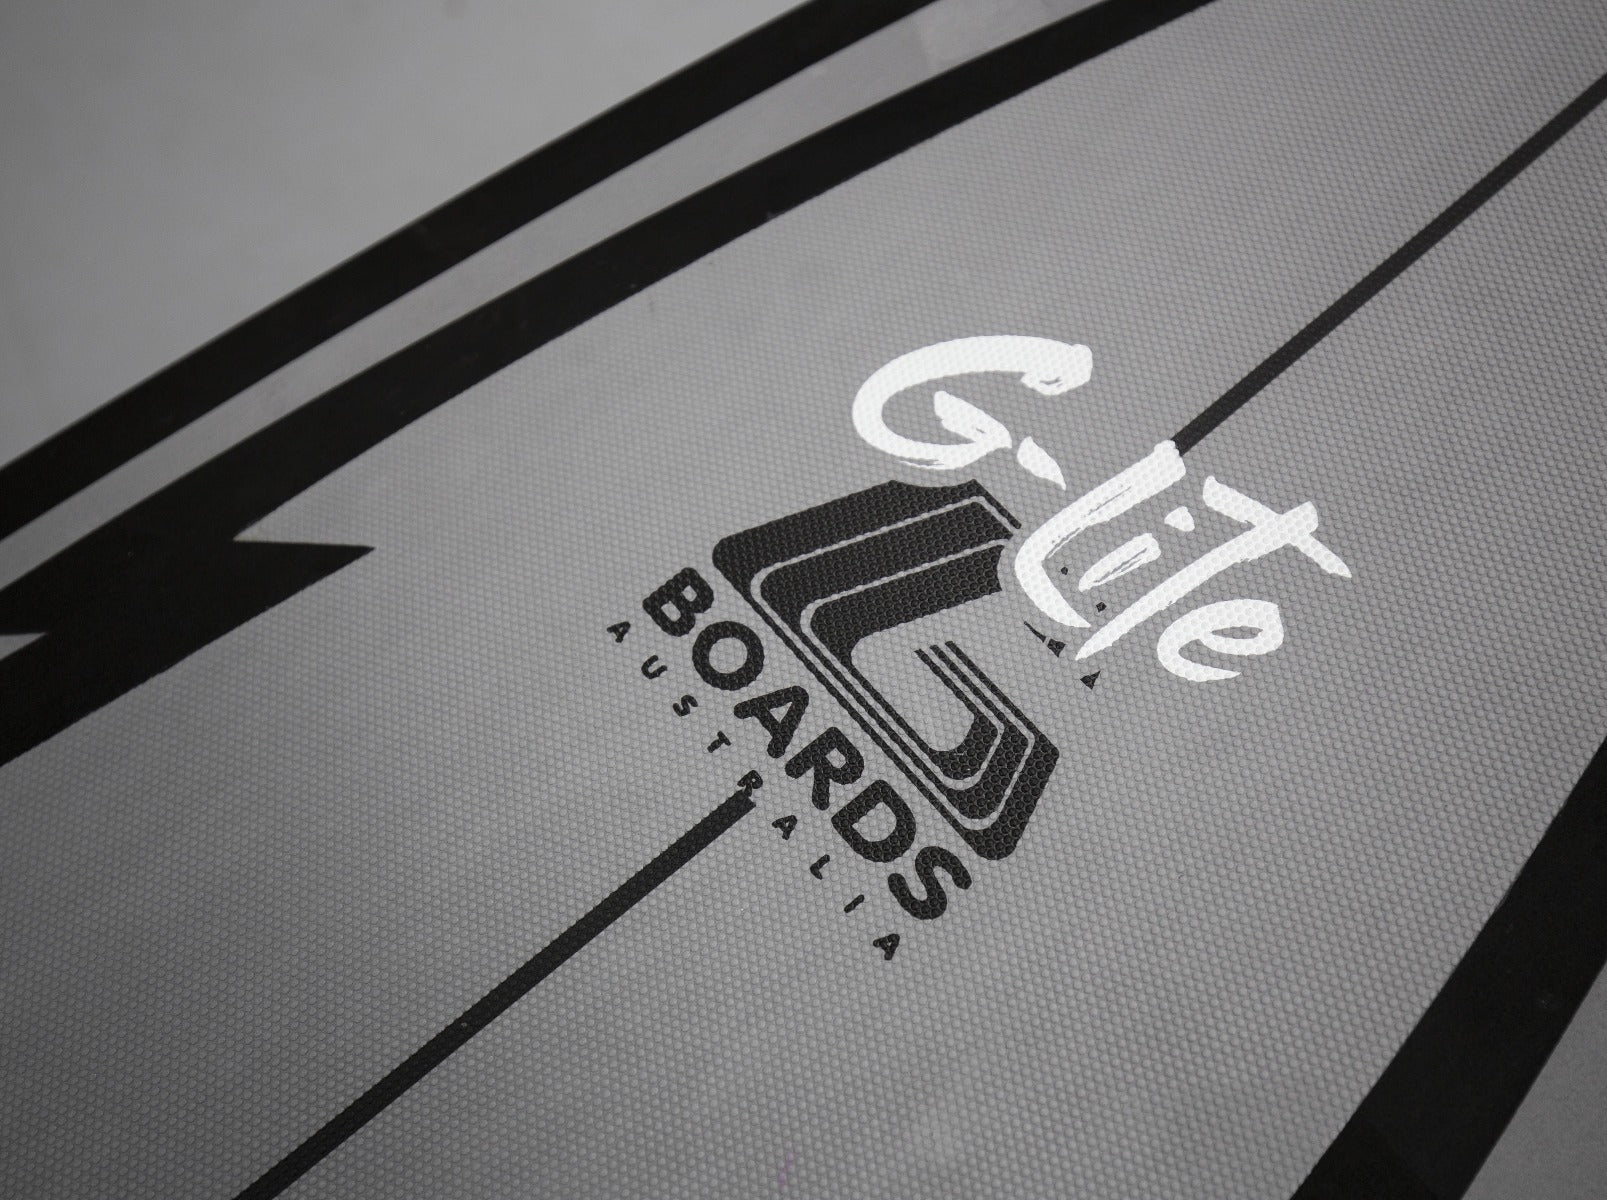 G-Lite 5'6" Swallow Tail Performance Softboard (LAST CHANCE)